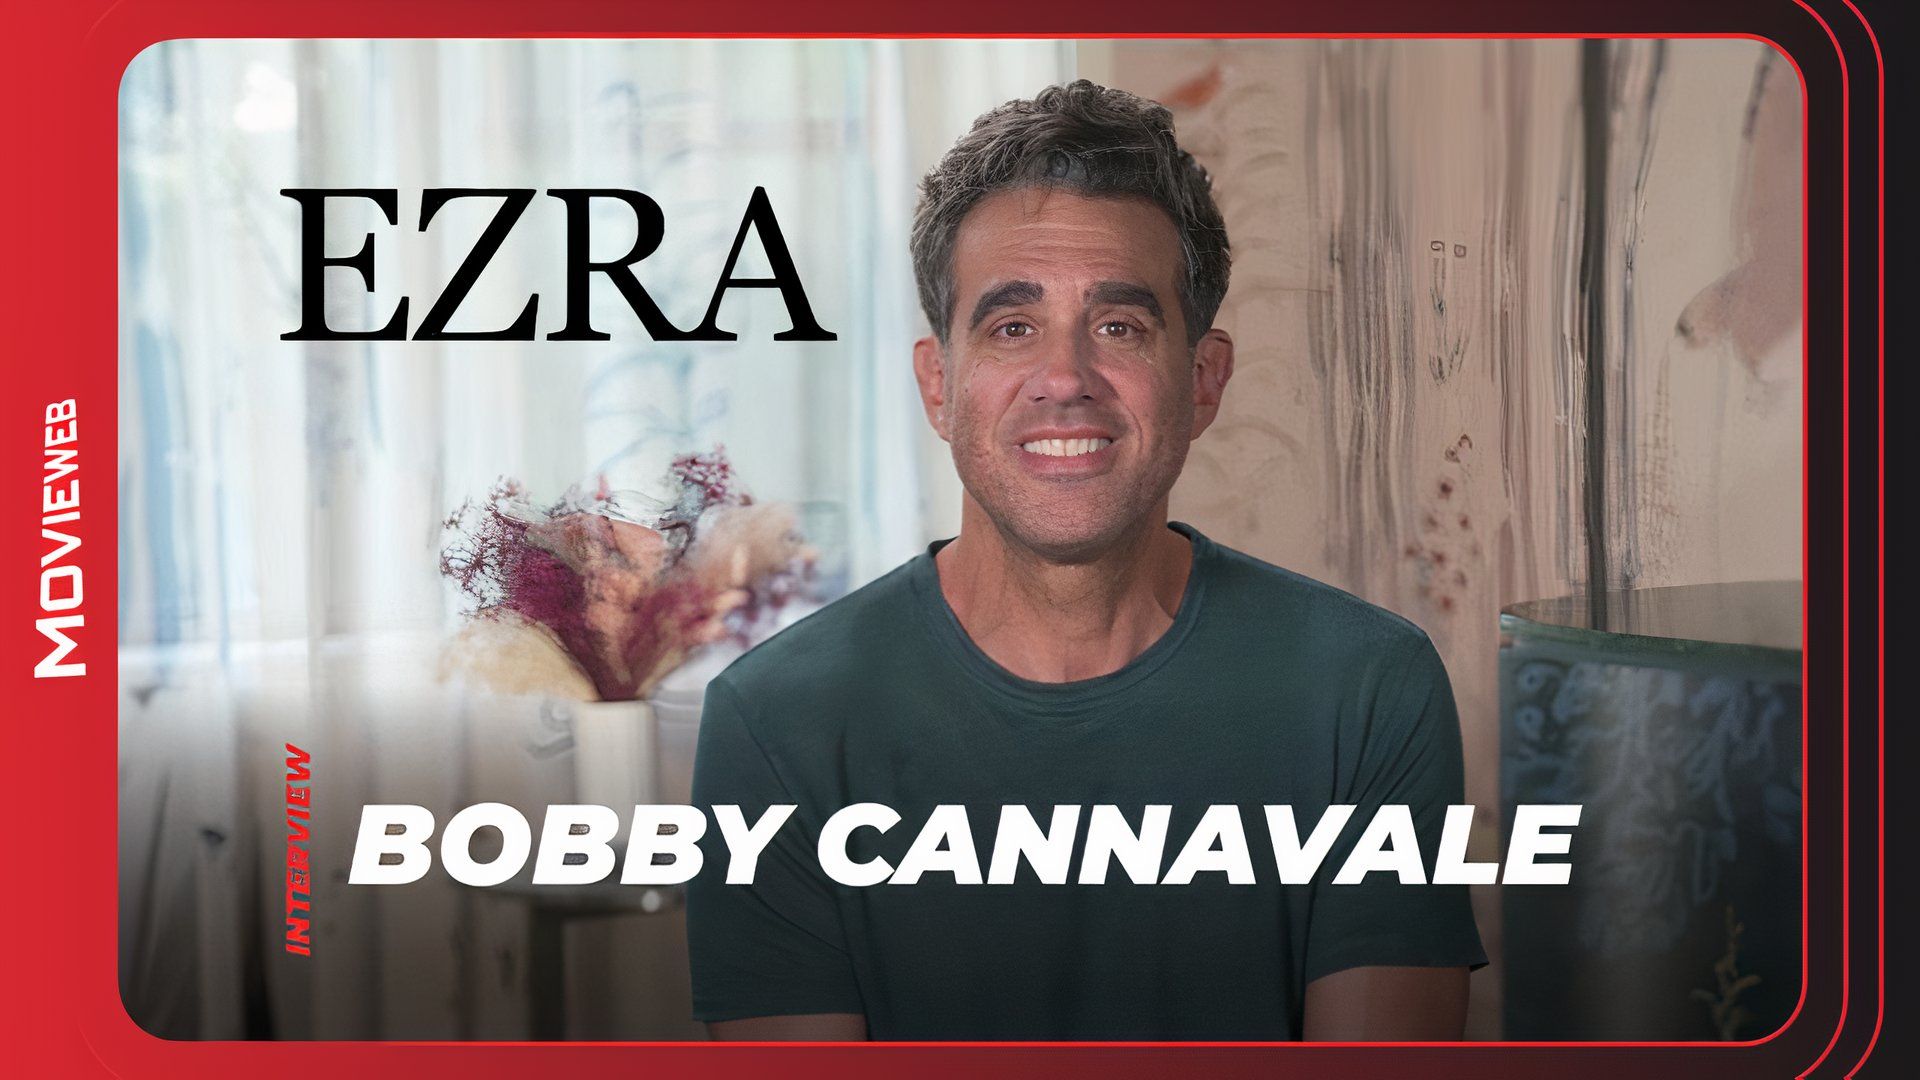 Ezra - Bobby Cannavale Interview